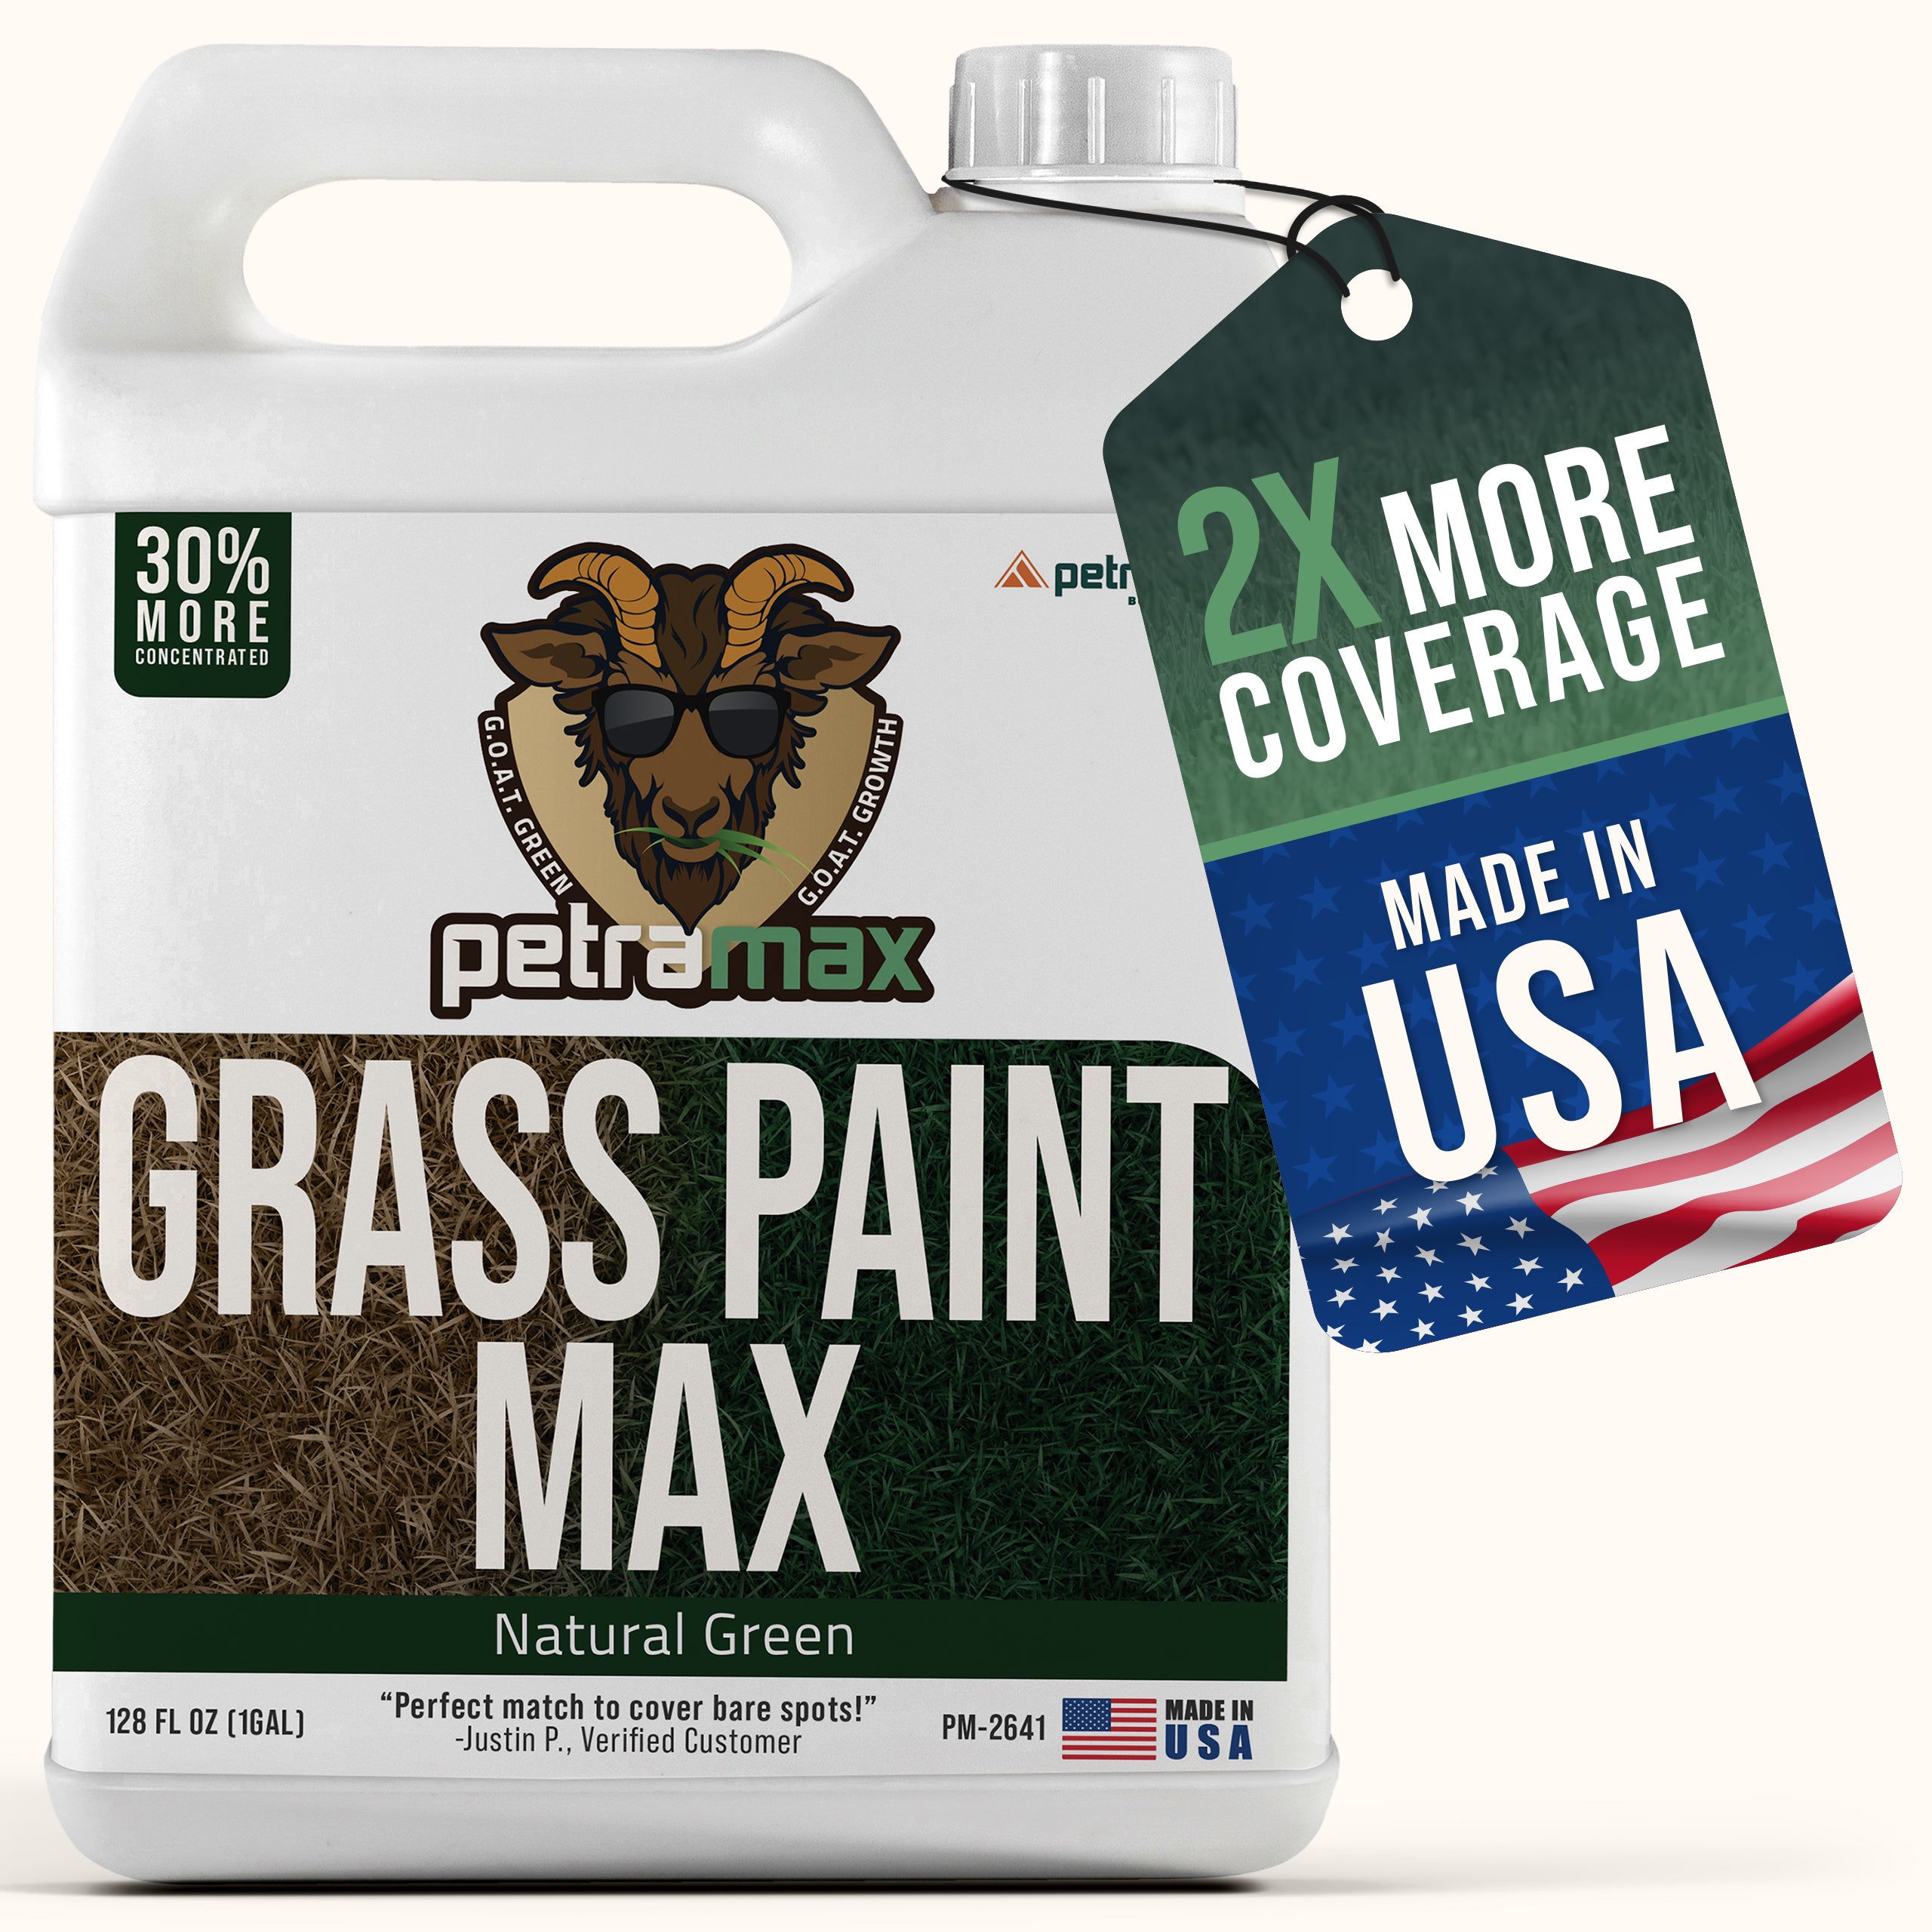 PetraMax Prime Green Grass Paint Max